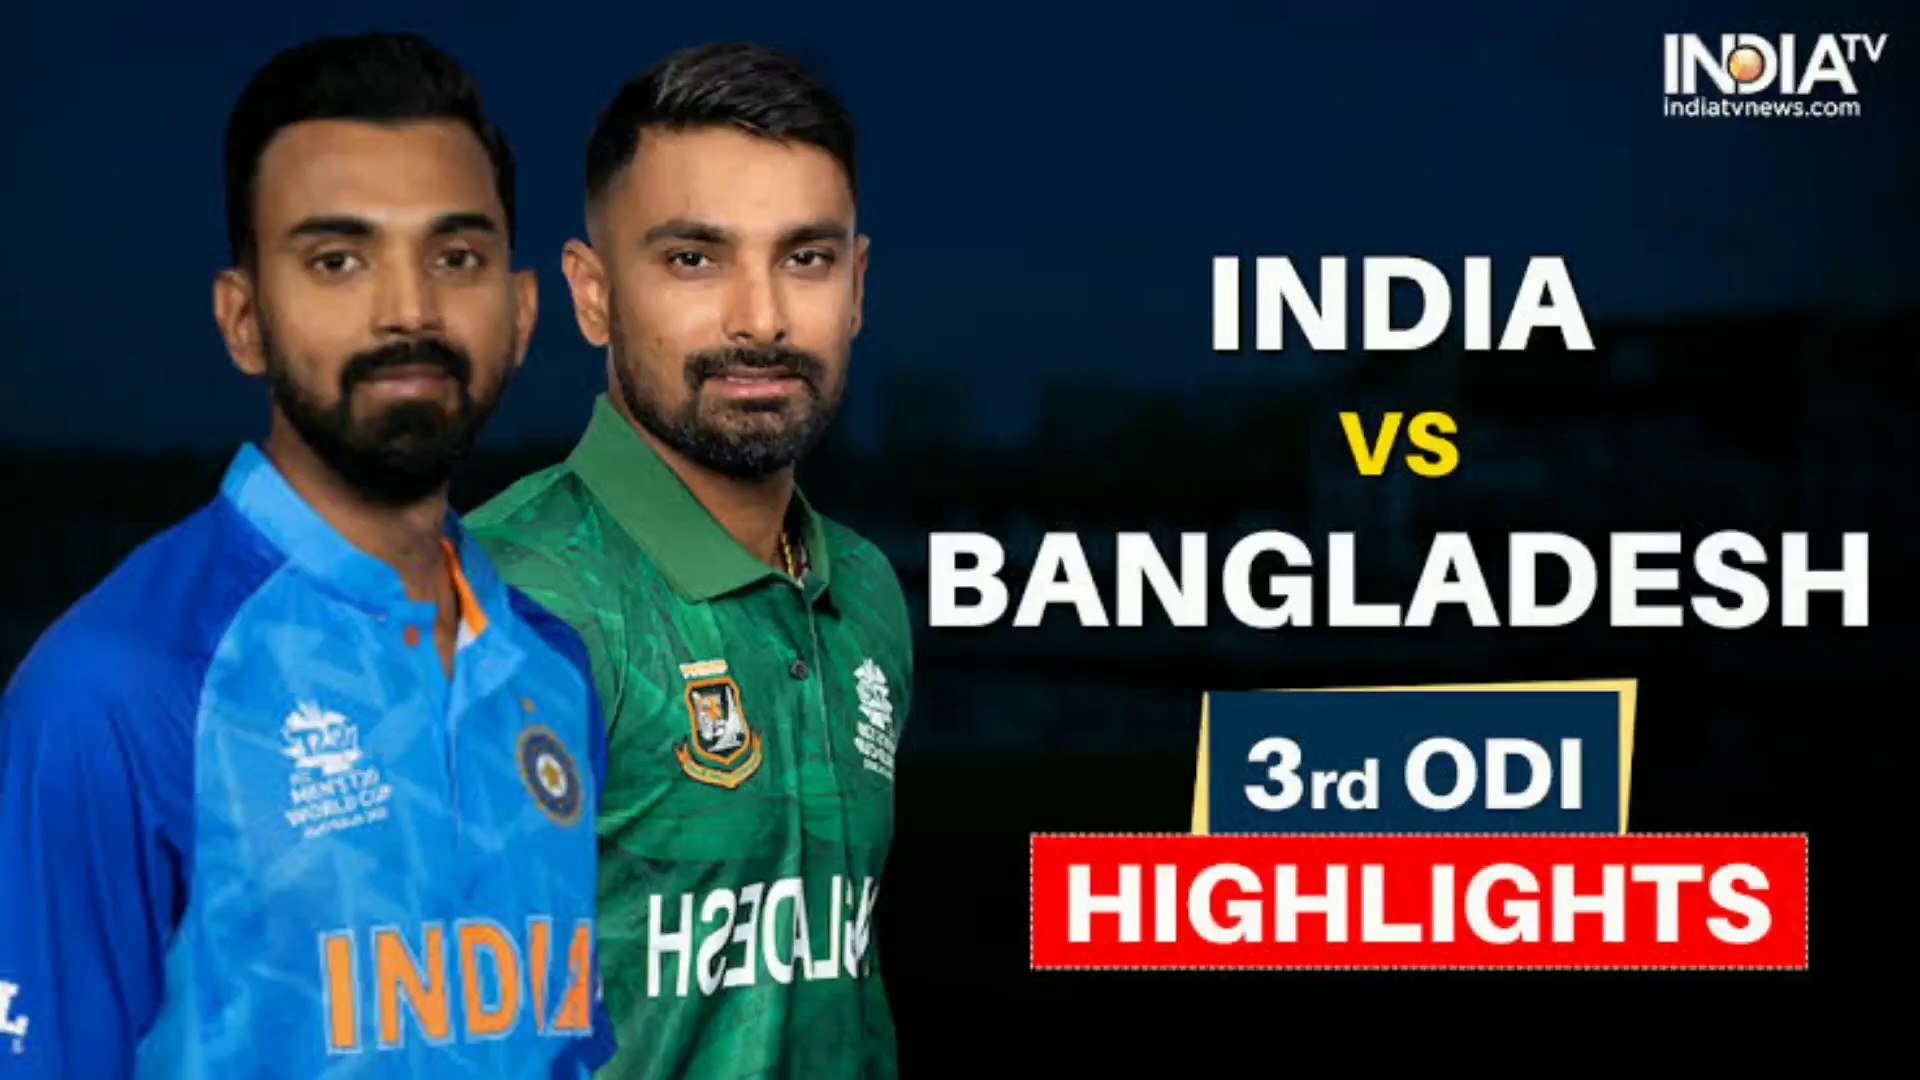 India vs Bangladesh 3rd ODI Match Highlights